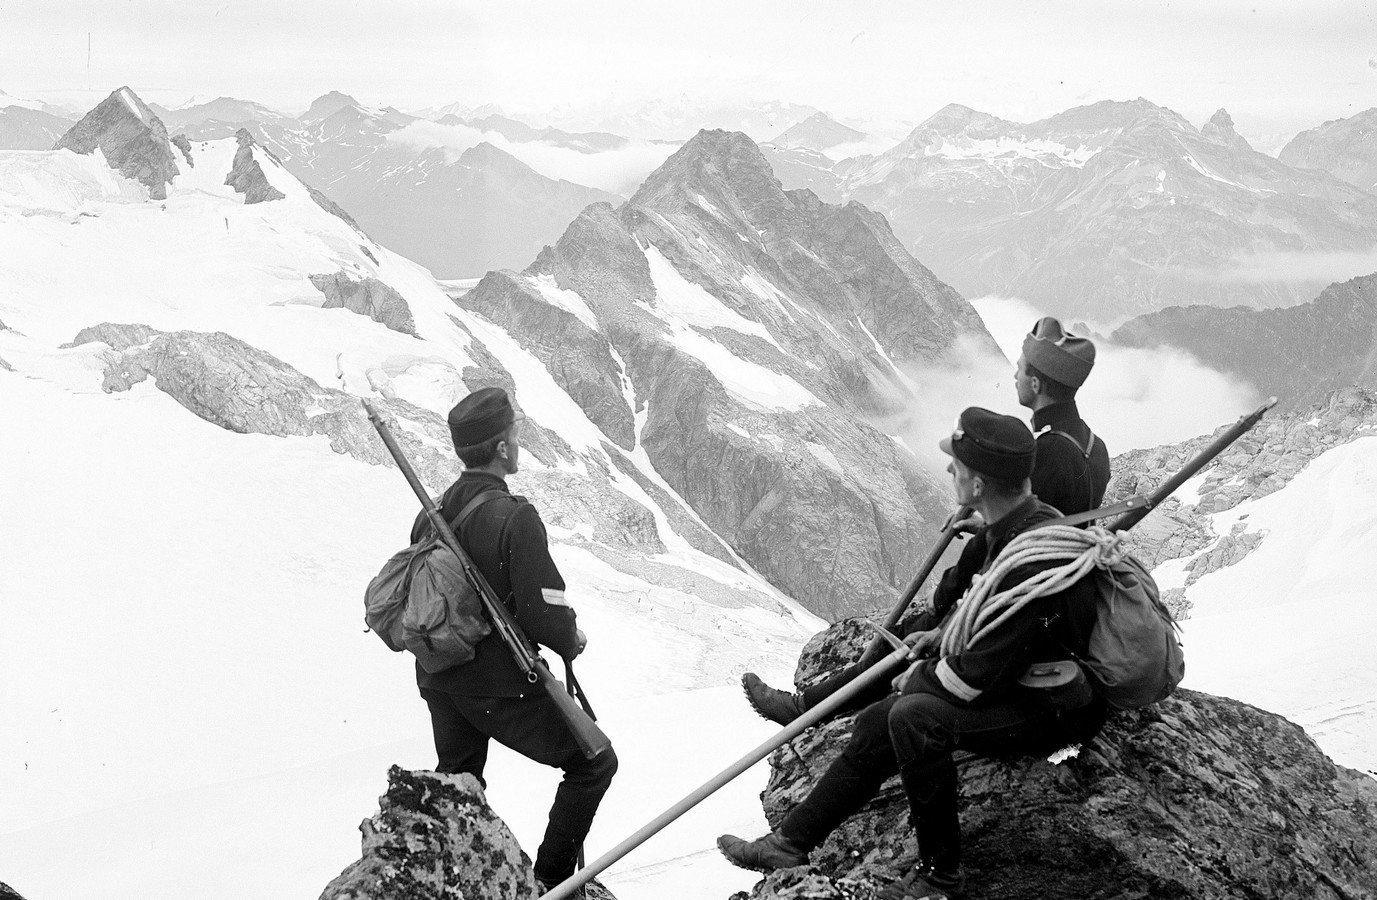 Old Photos Monochrome History Photography Switzerland Italy Border Alps Mountains Rock Winter Snow S 1377x900